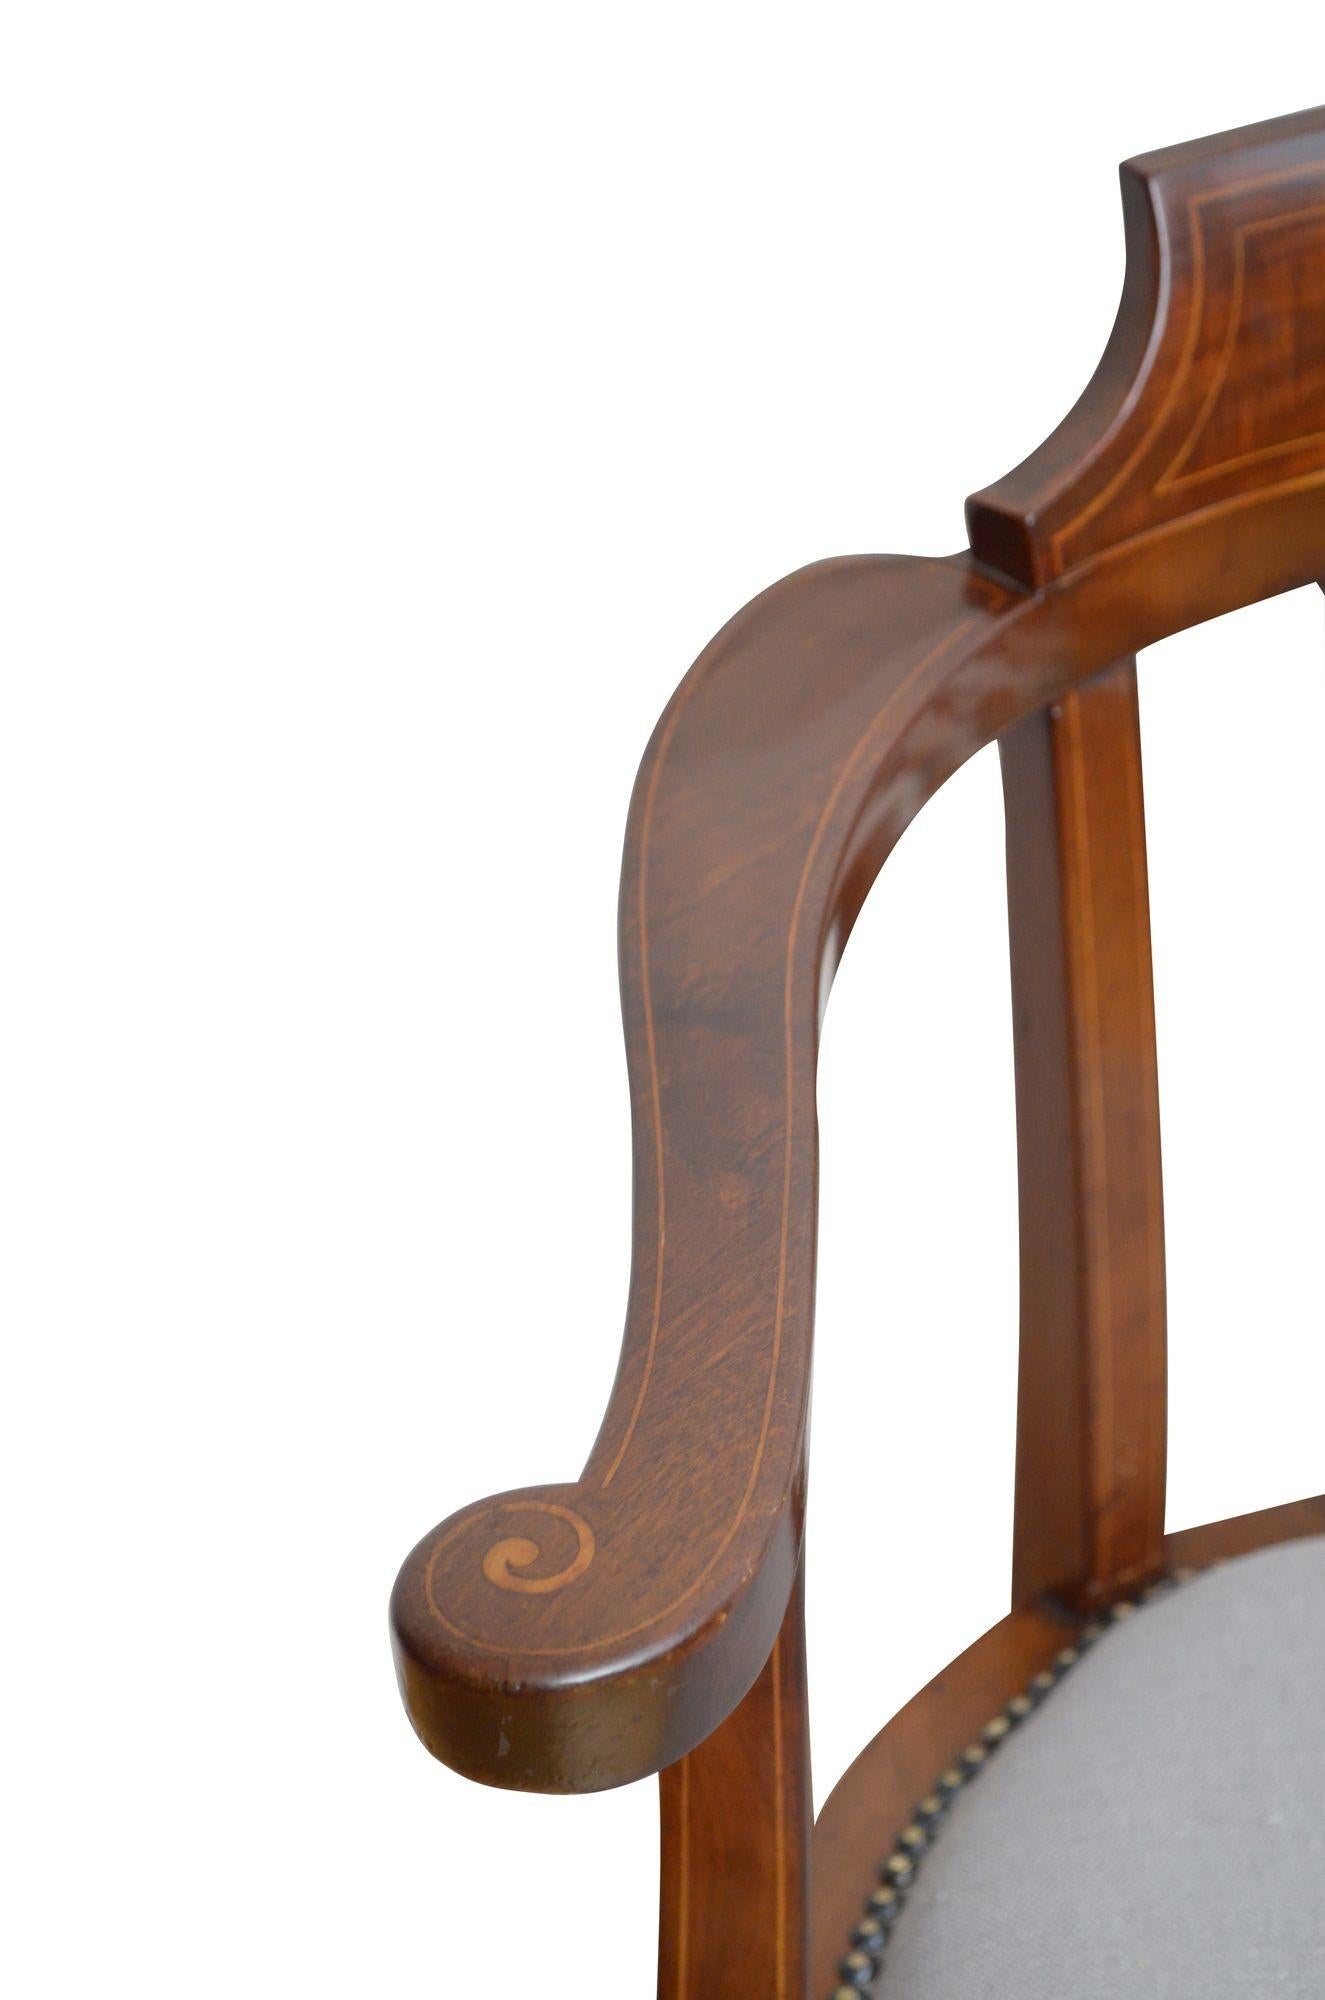 Fine English Edwardian Revolving Desk Chair For Sale 4